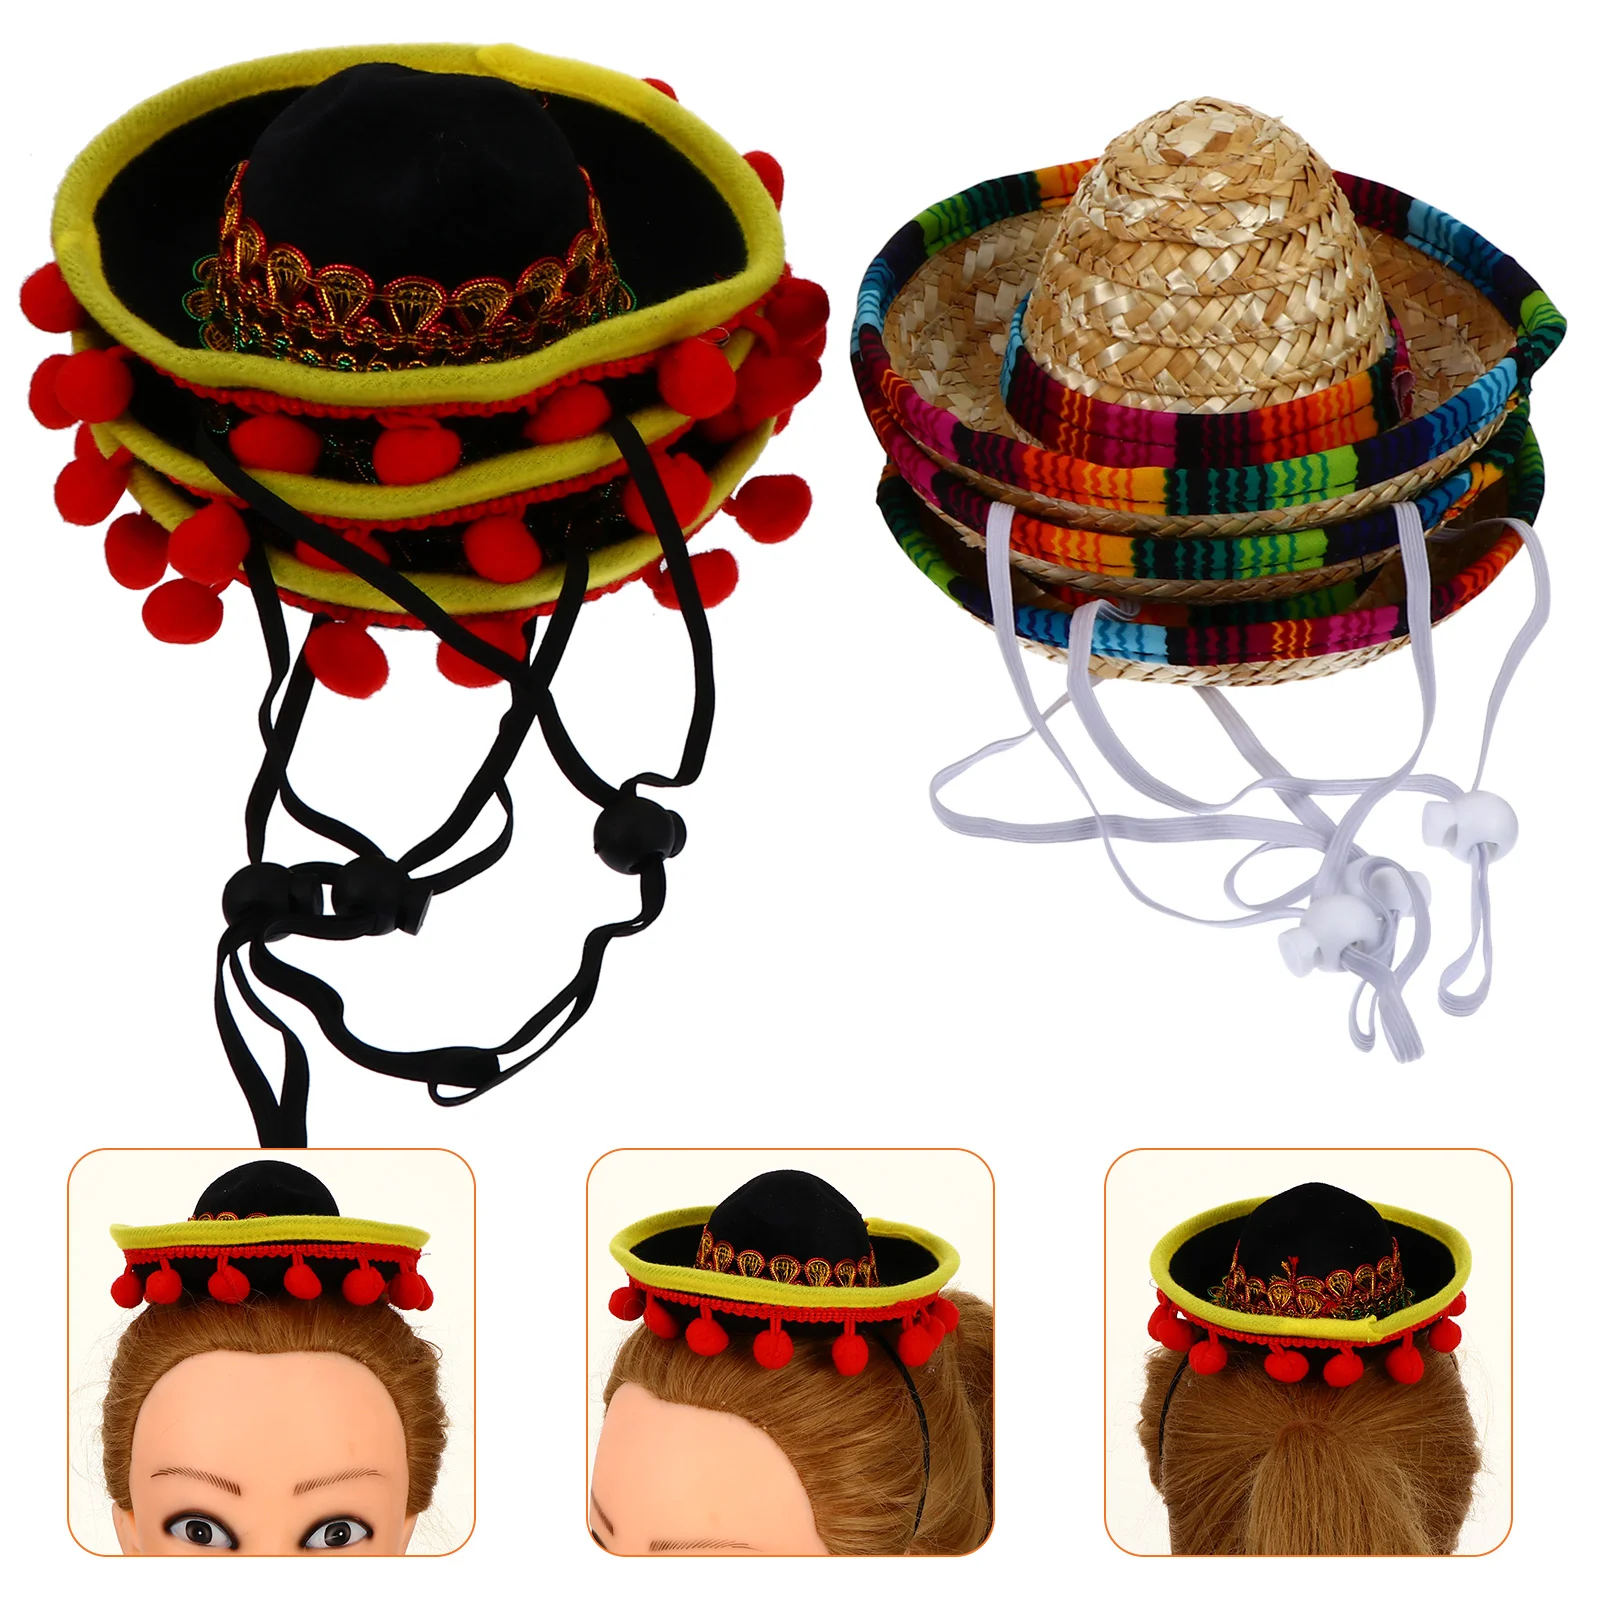 

Hats Party Hat Sombrero Straw Mexican Mini Fiesta Cowboy Cap De Cinco Mayo Round Dress Beach Fancy Carnival Festival Pets